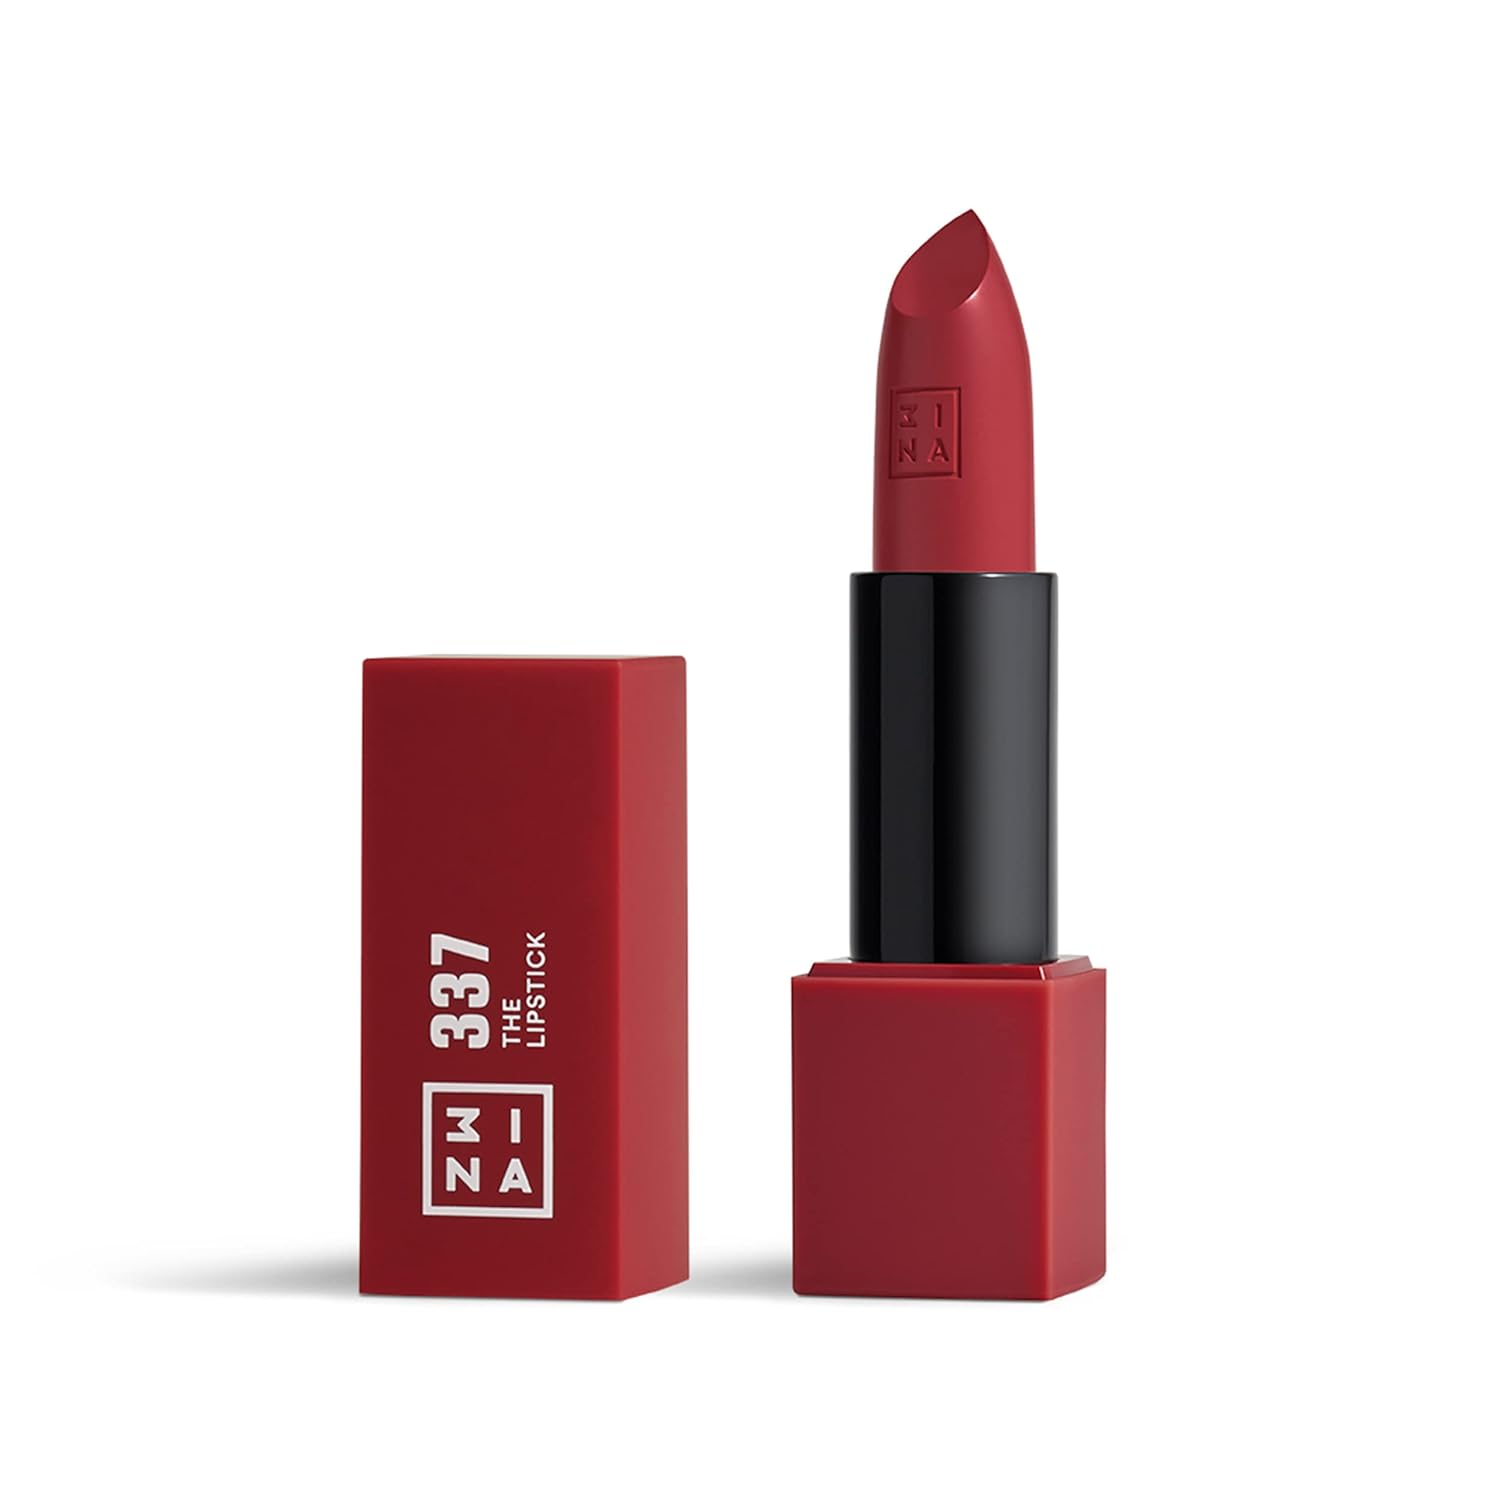 3ina make -up - The Lipstick 337 - Dark Wine Lipstick - Matte Lip Pen with Vitamin E And Shea Butter - Long -Lasting Highly Pigmented Cream - Vanilla Fragrance - Vegan - Crulety Free